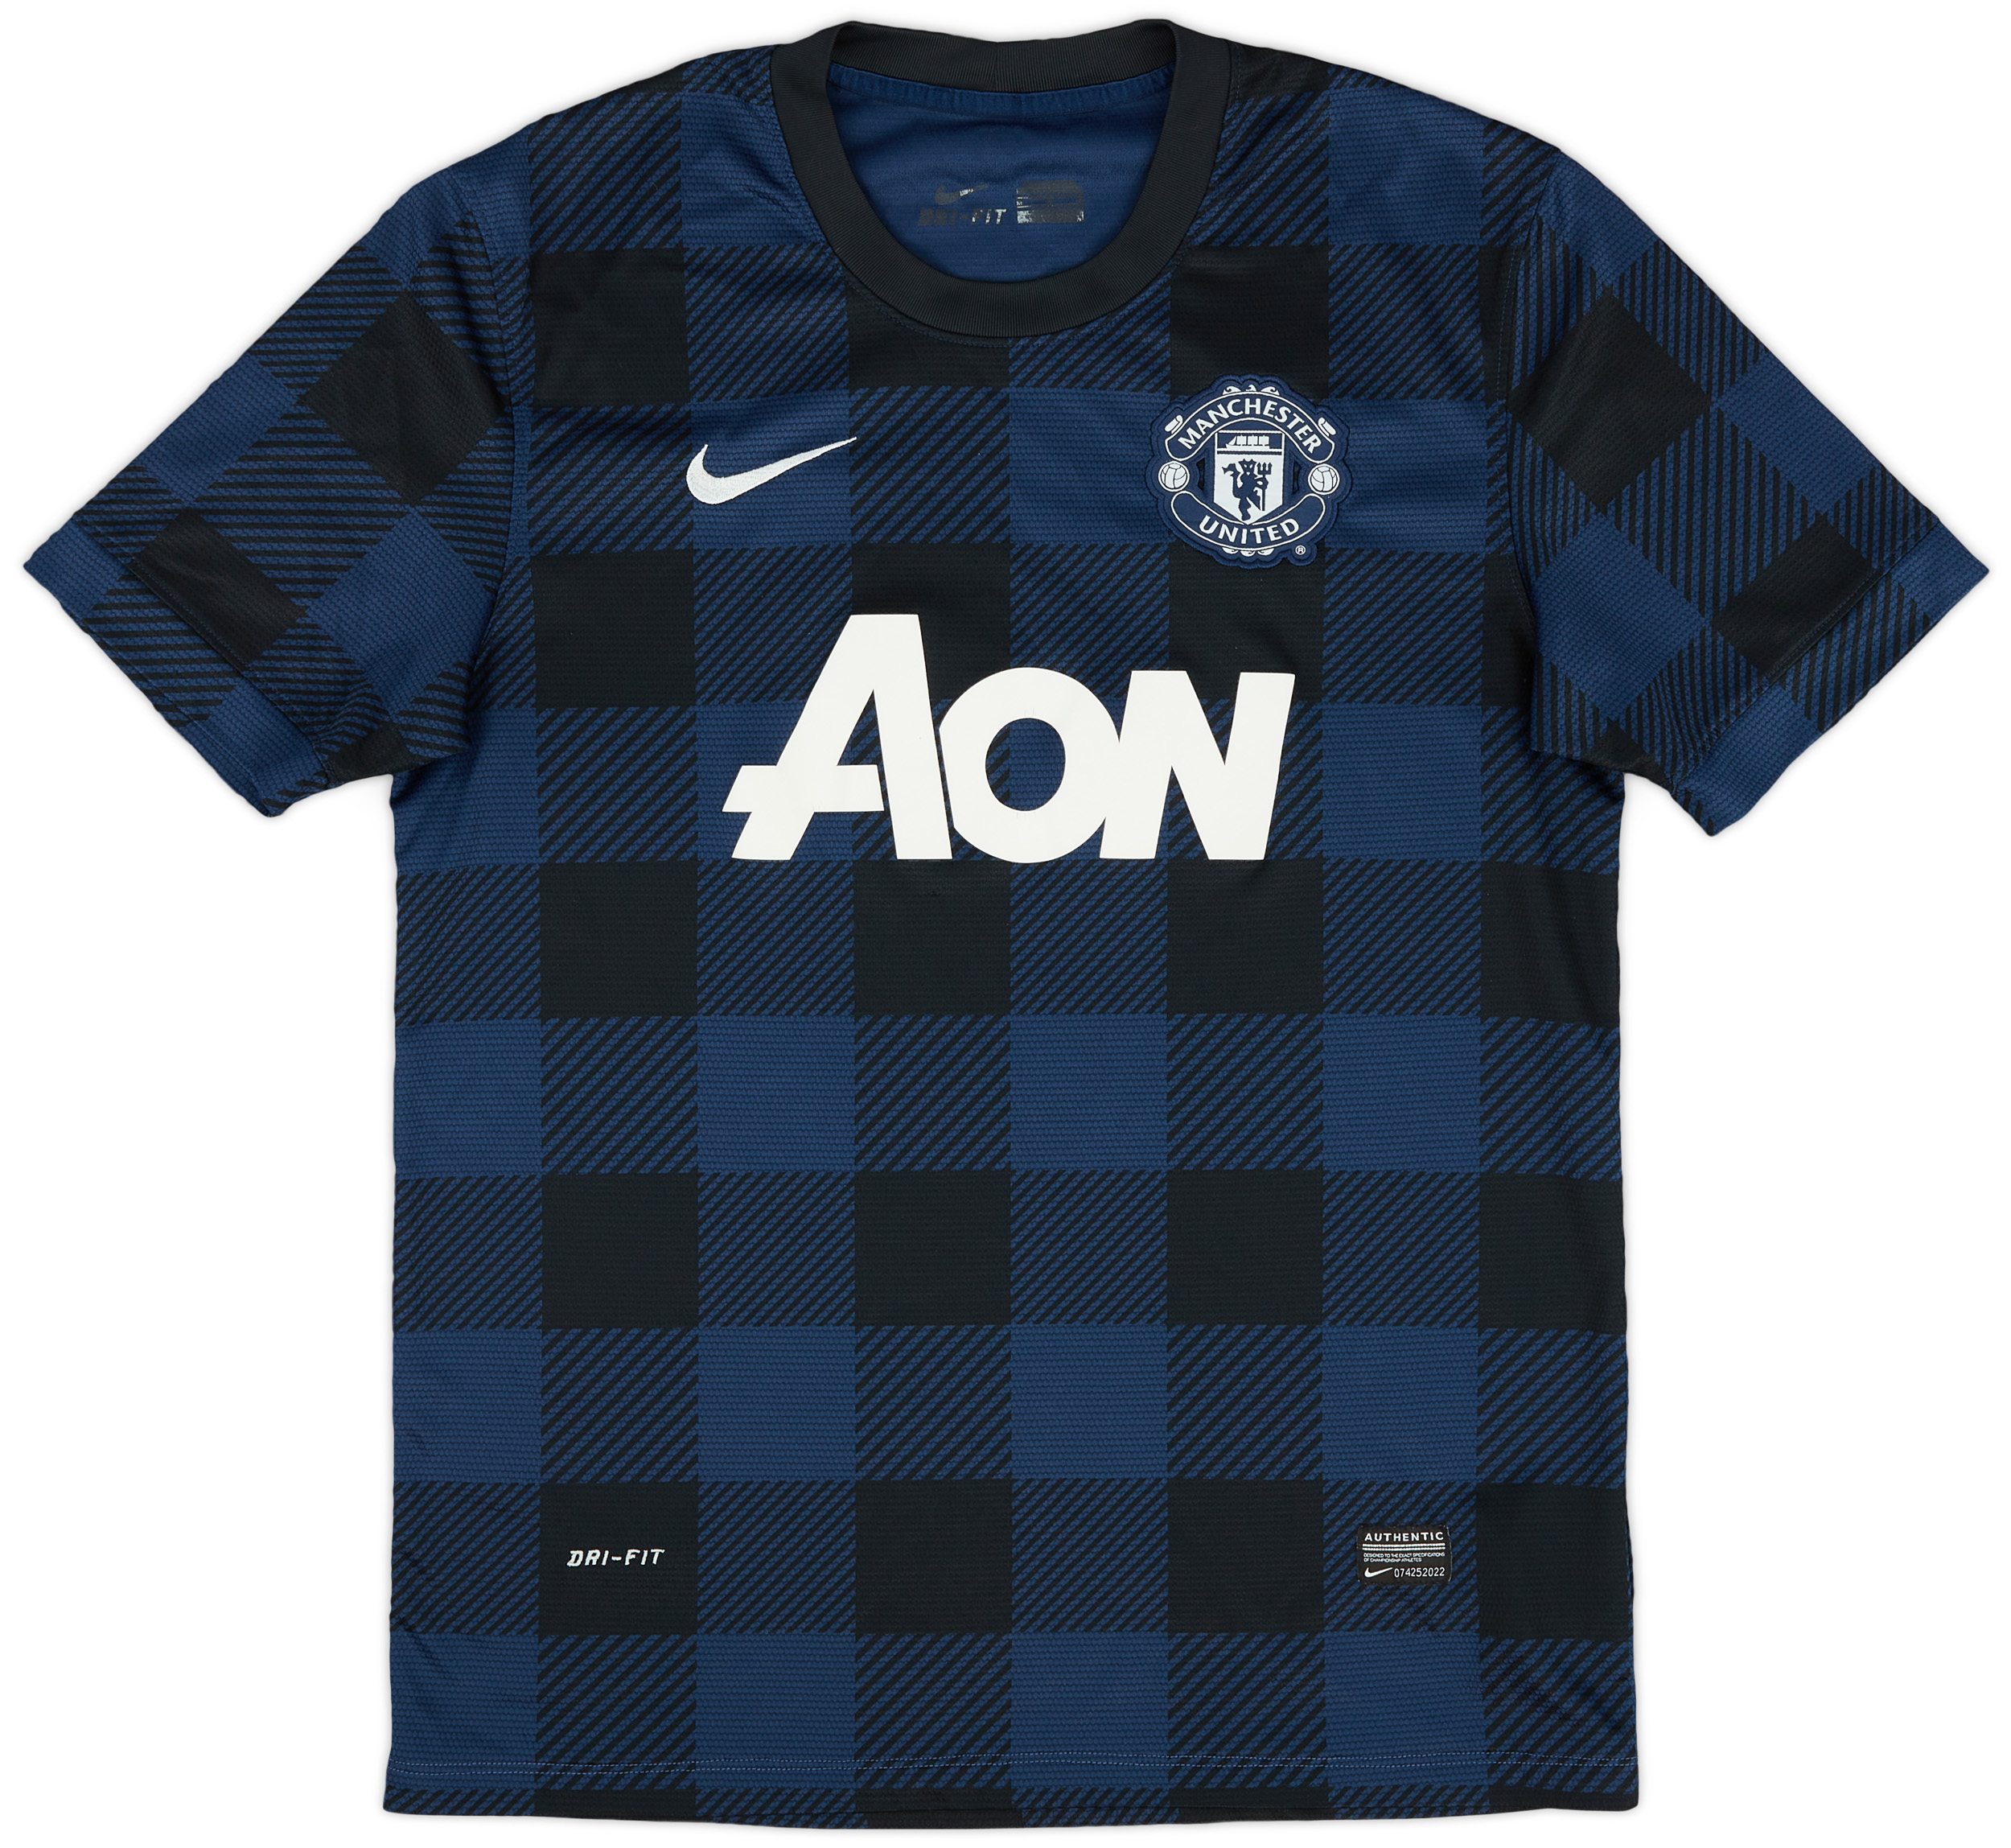 2013-14 Manchester United Away Shirt - 8/10 - ()